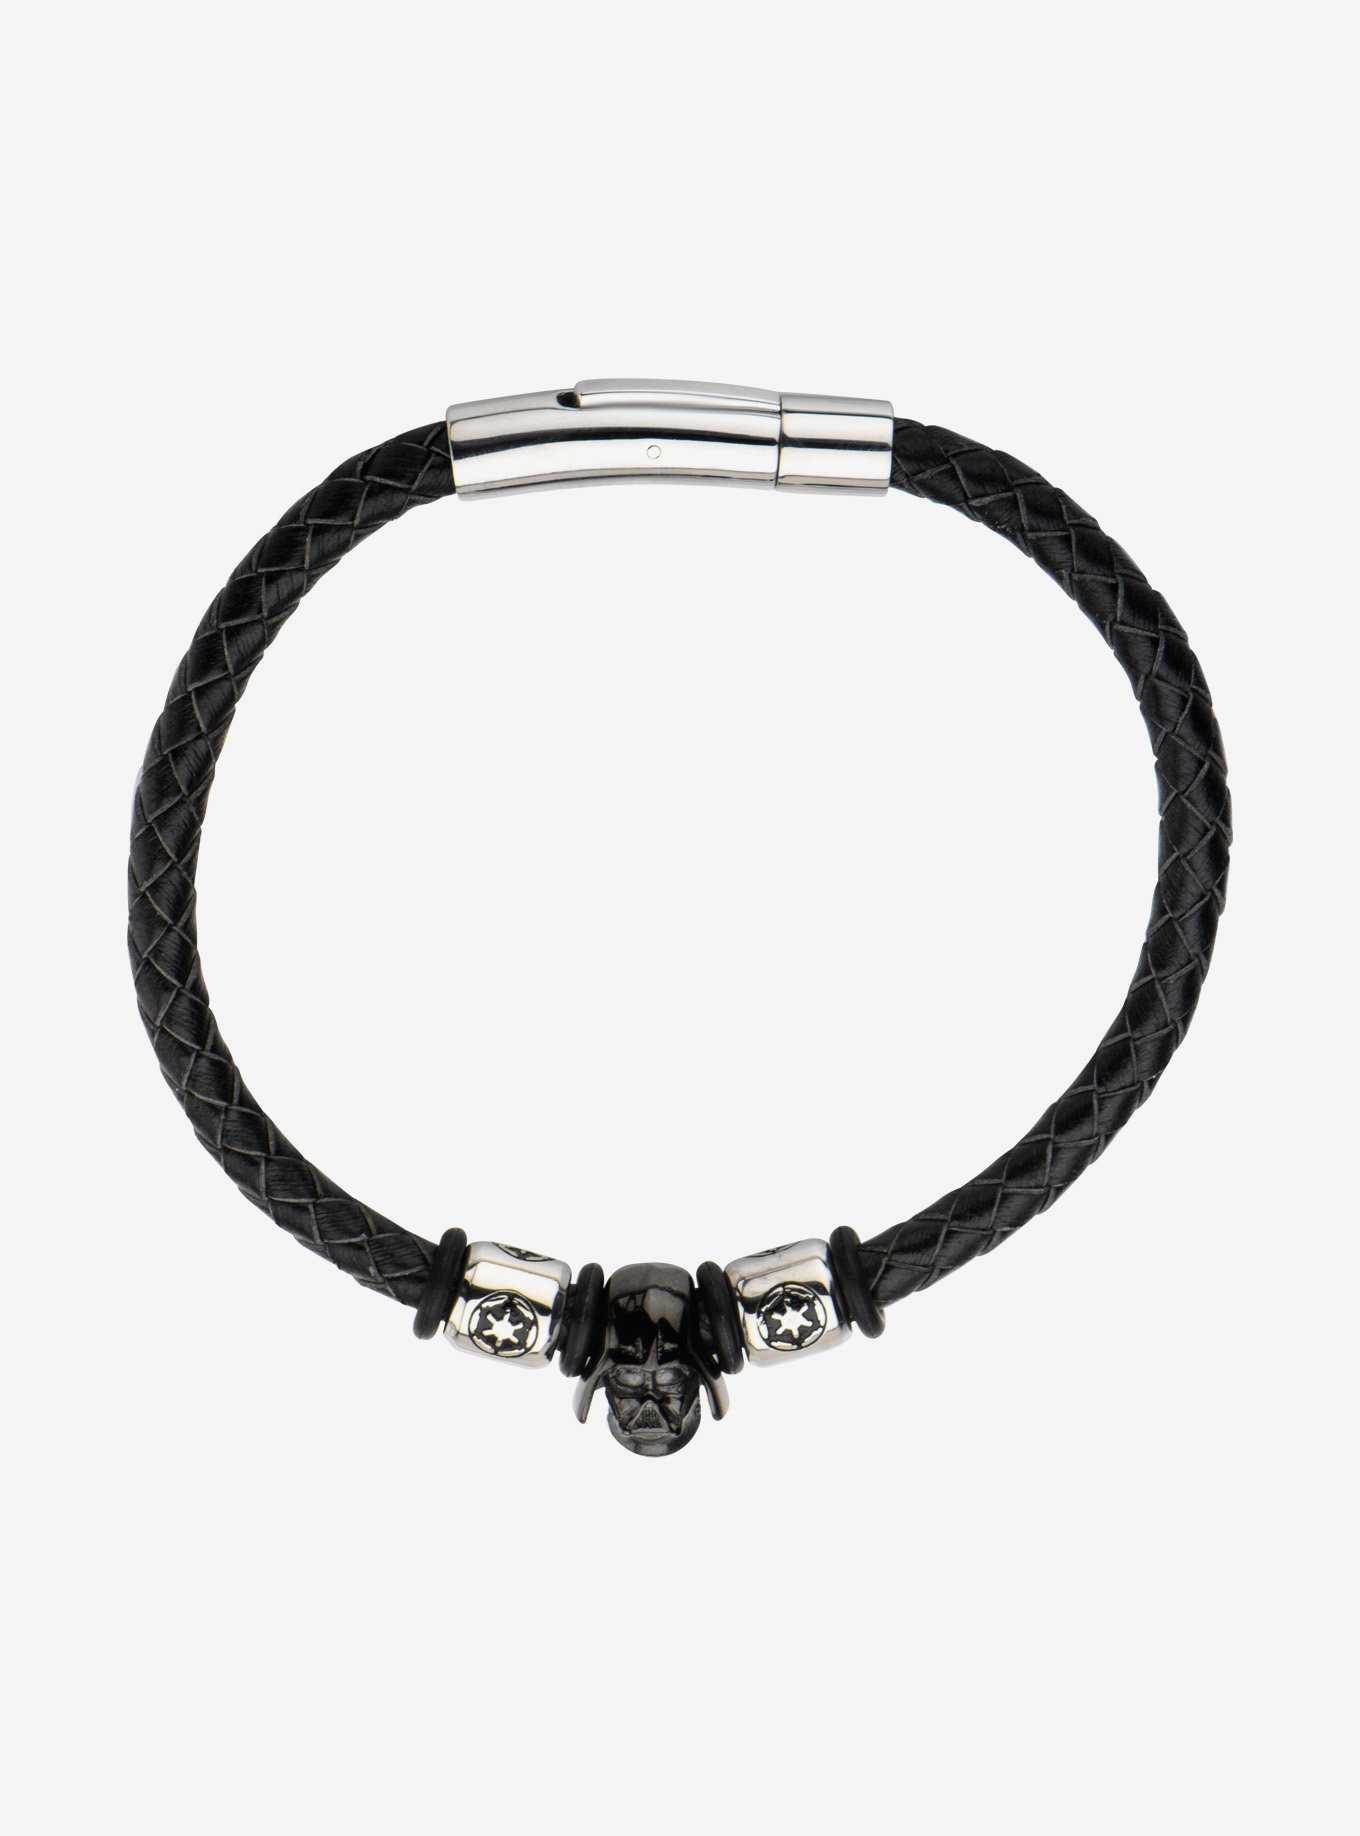 Star Wars Darth Vader Helmet and Galactic Empire Symbol Beads Leather Bracelet, , hi-res